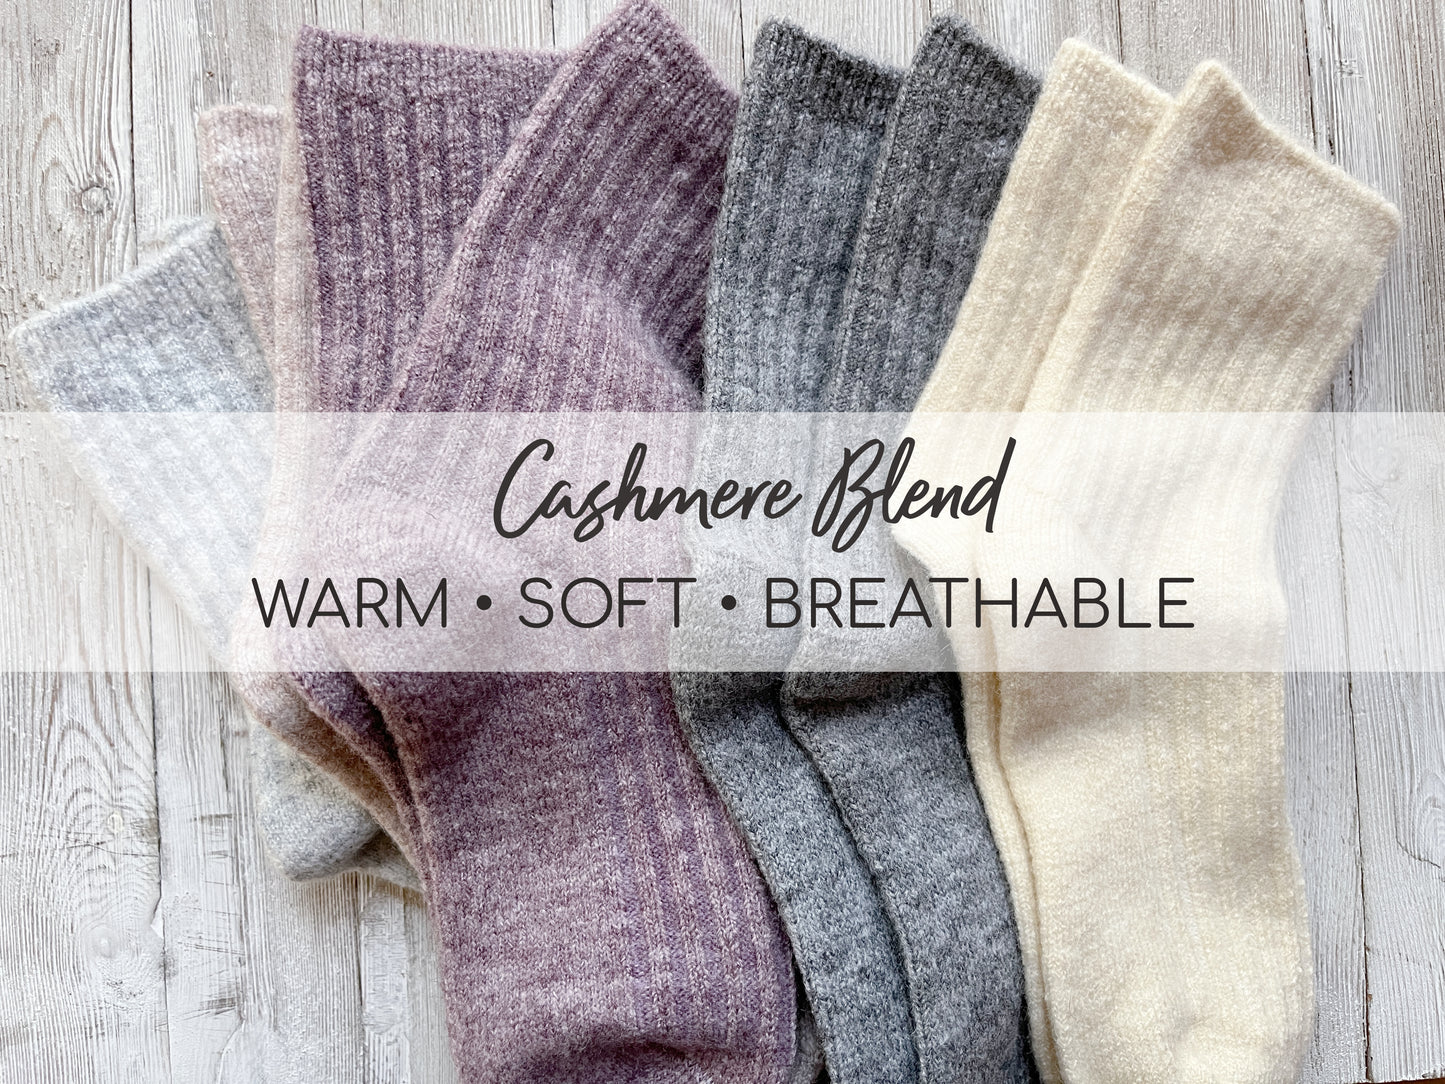 Cashmere wool socks